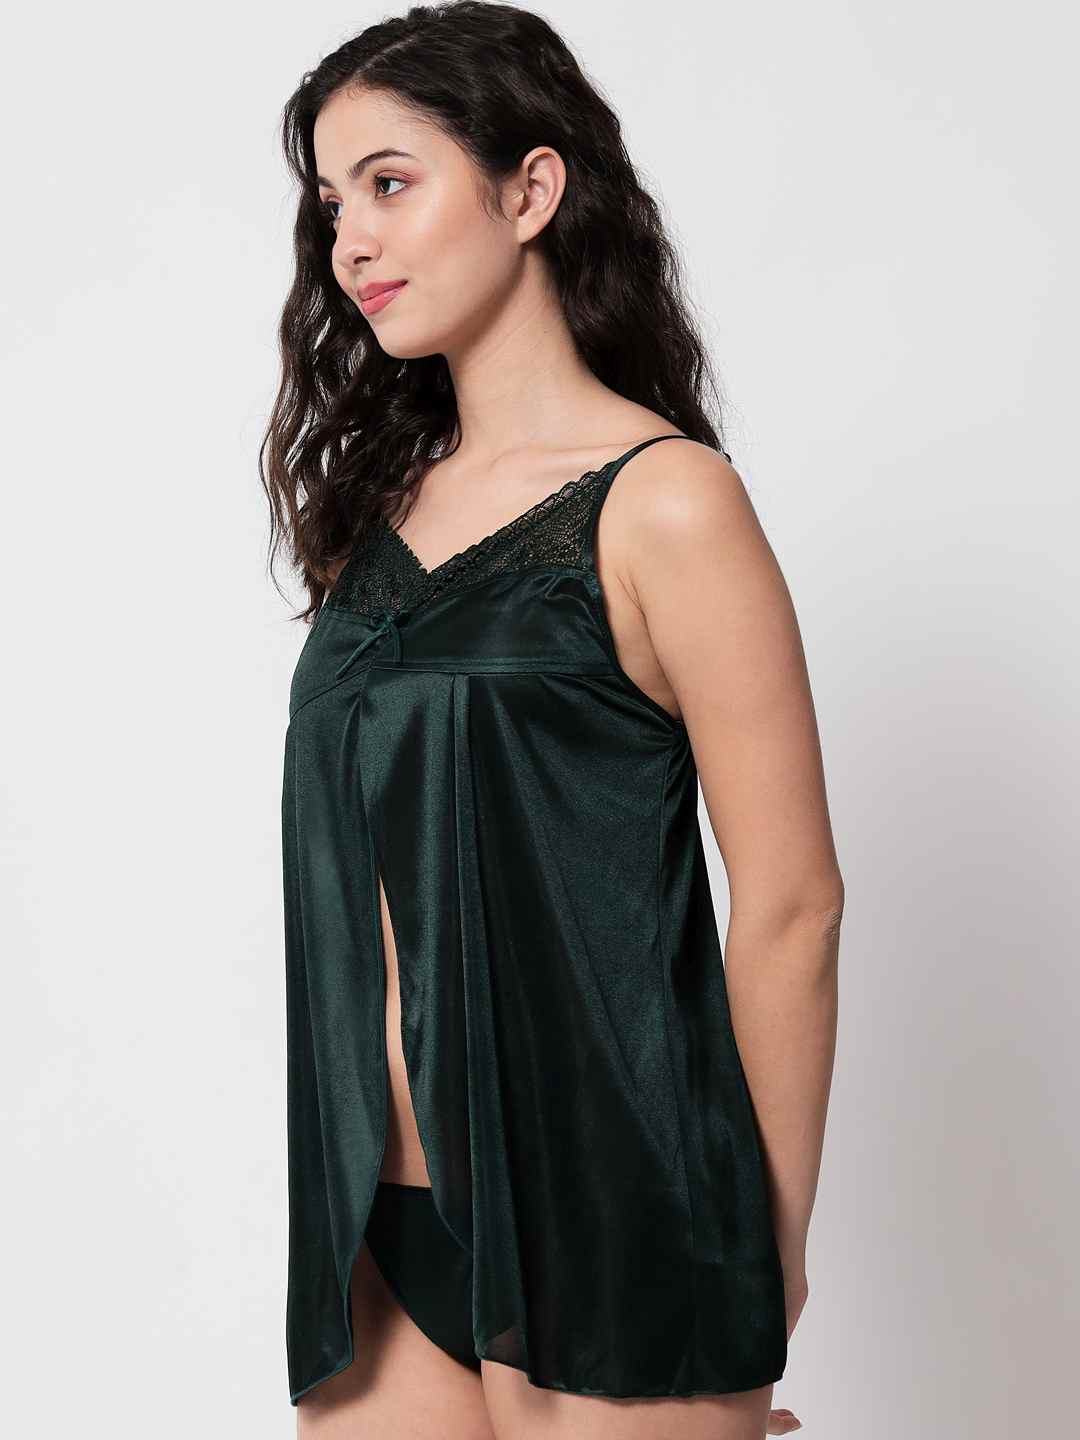 Plus Size Satin Green Honeymoon Babydoll Hot Night Dress 41Gb – Klamotten